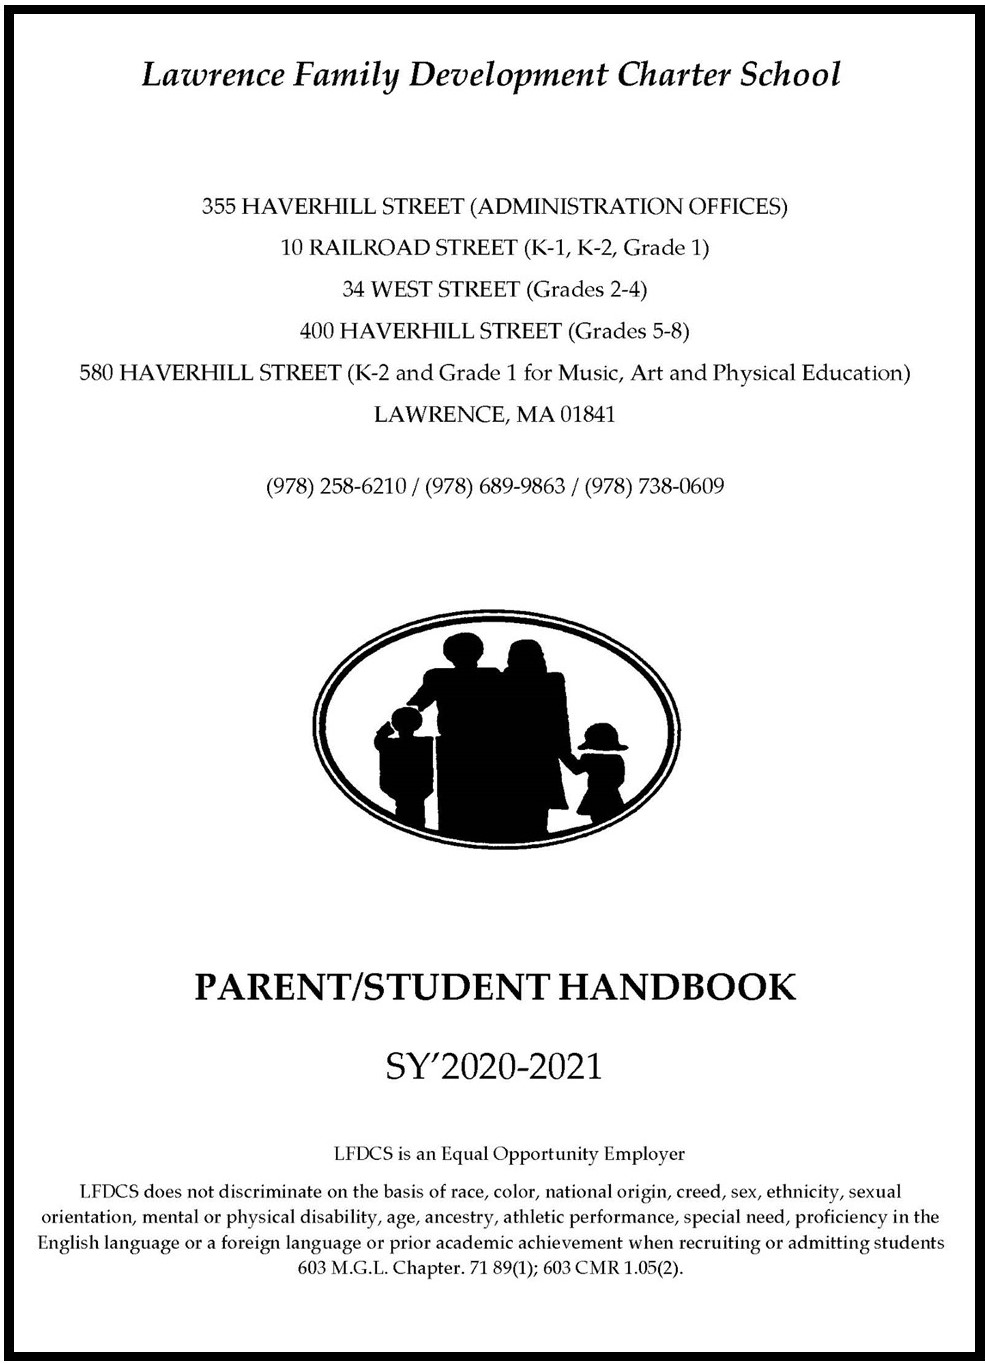 Parent Student Handbook Cover revised